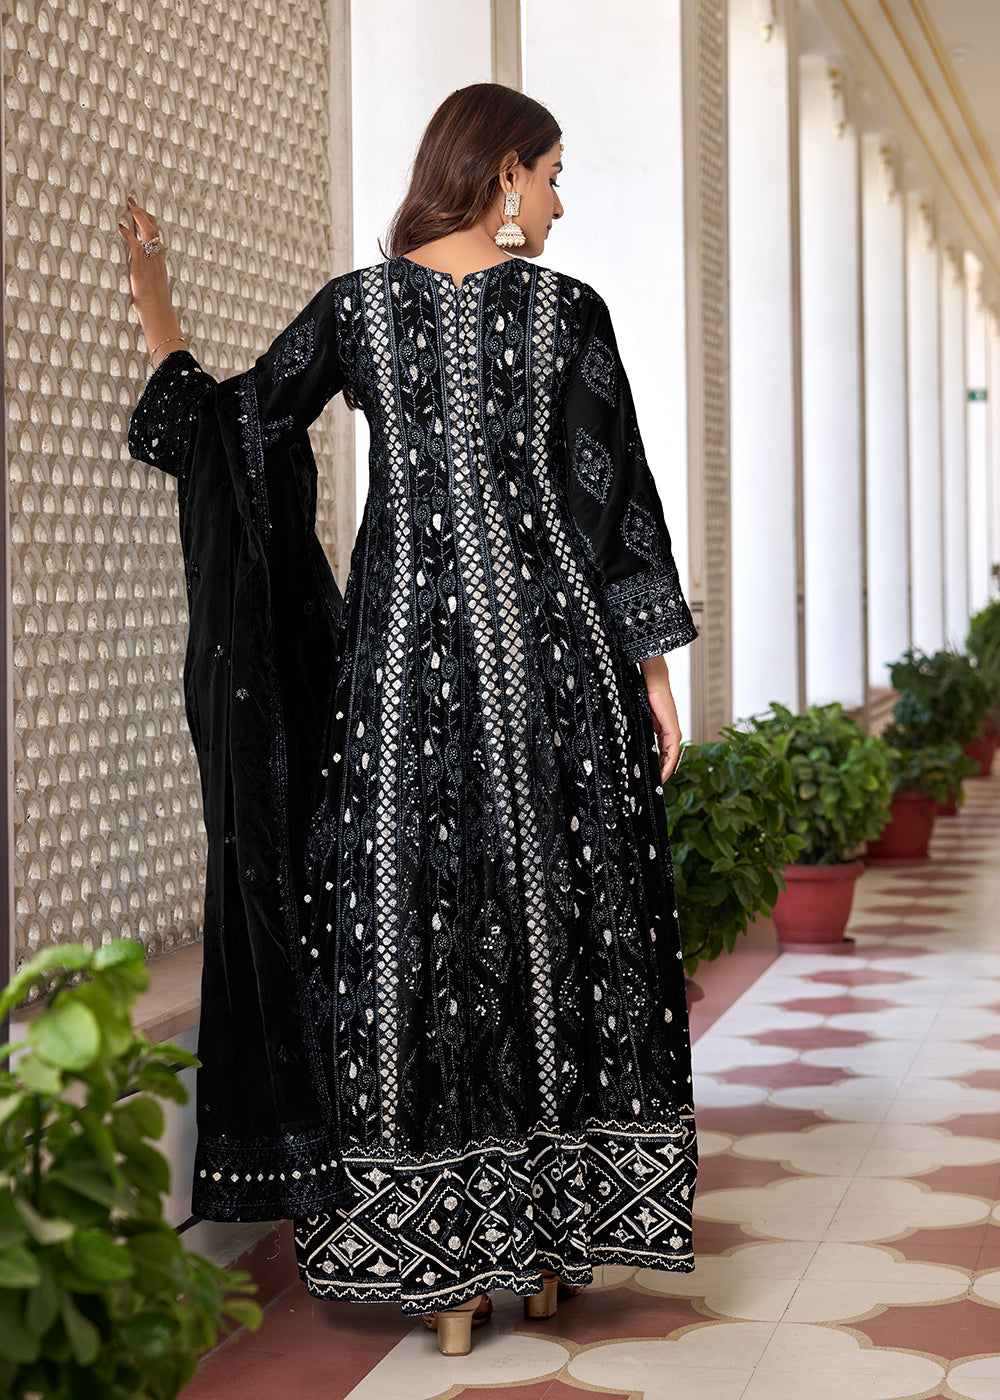 Buy Now Slit Style Black Embroidered Wedding Festive Anarkali Suit Online in USA, UK, Australia, New Zealand, Canada & Worldwide at Empress Clothing.